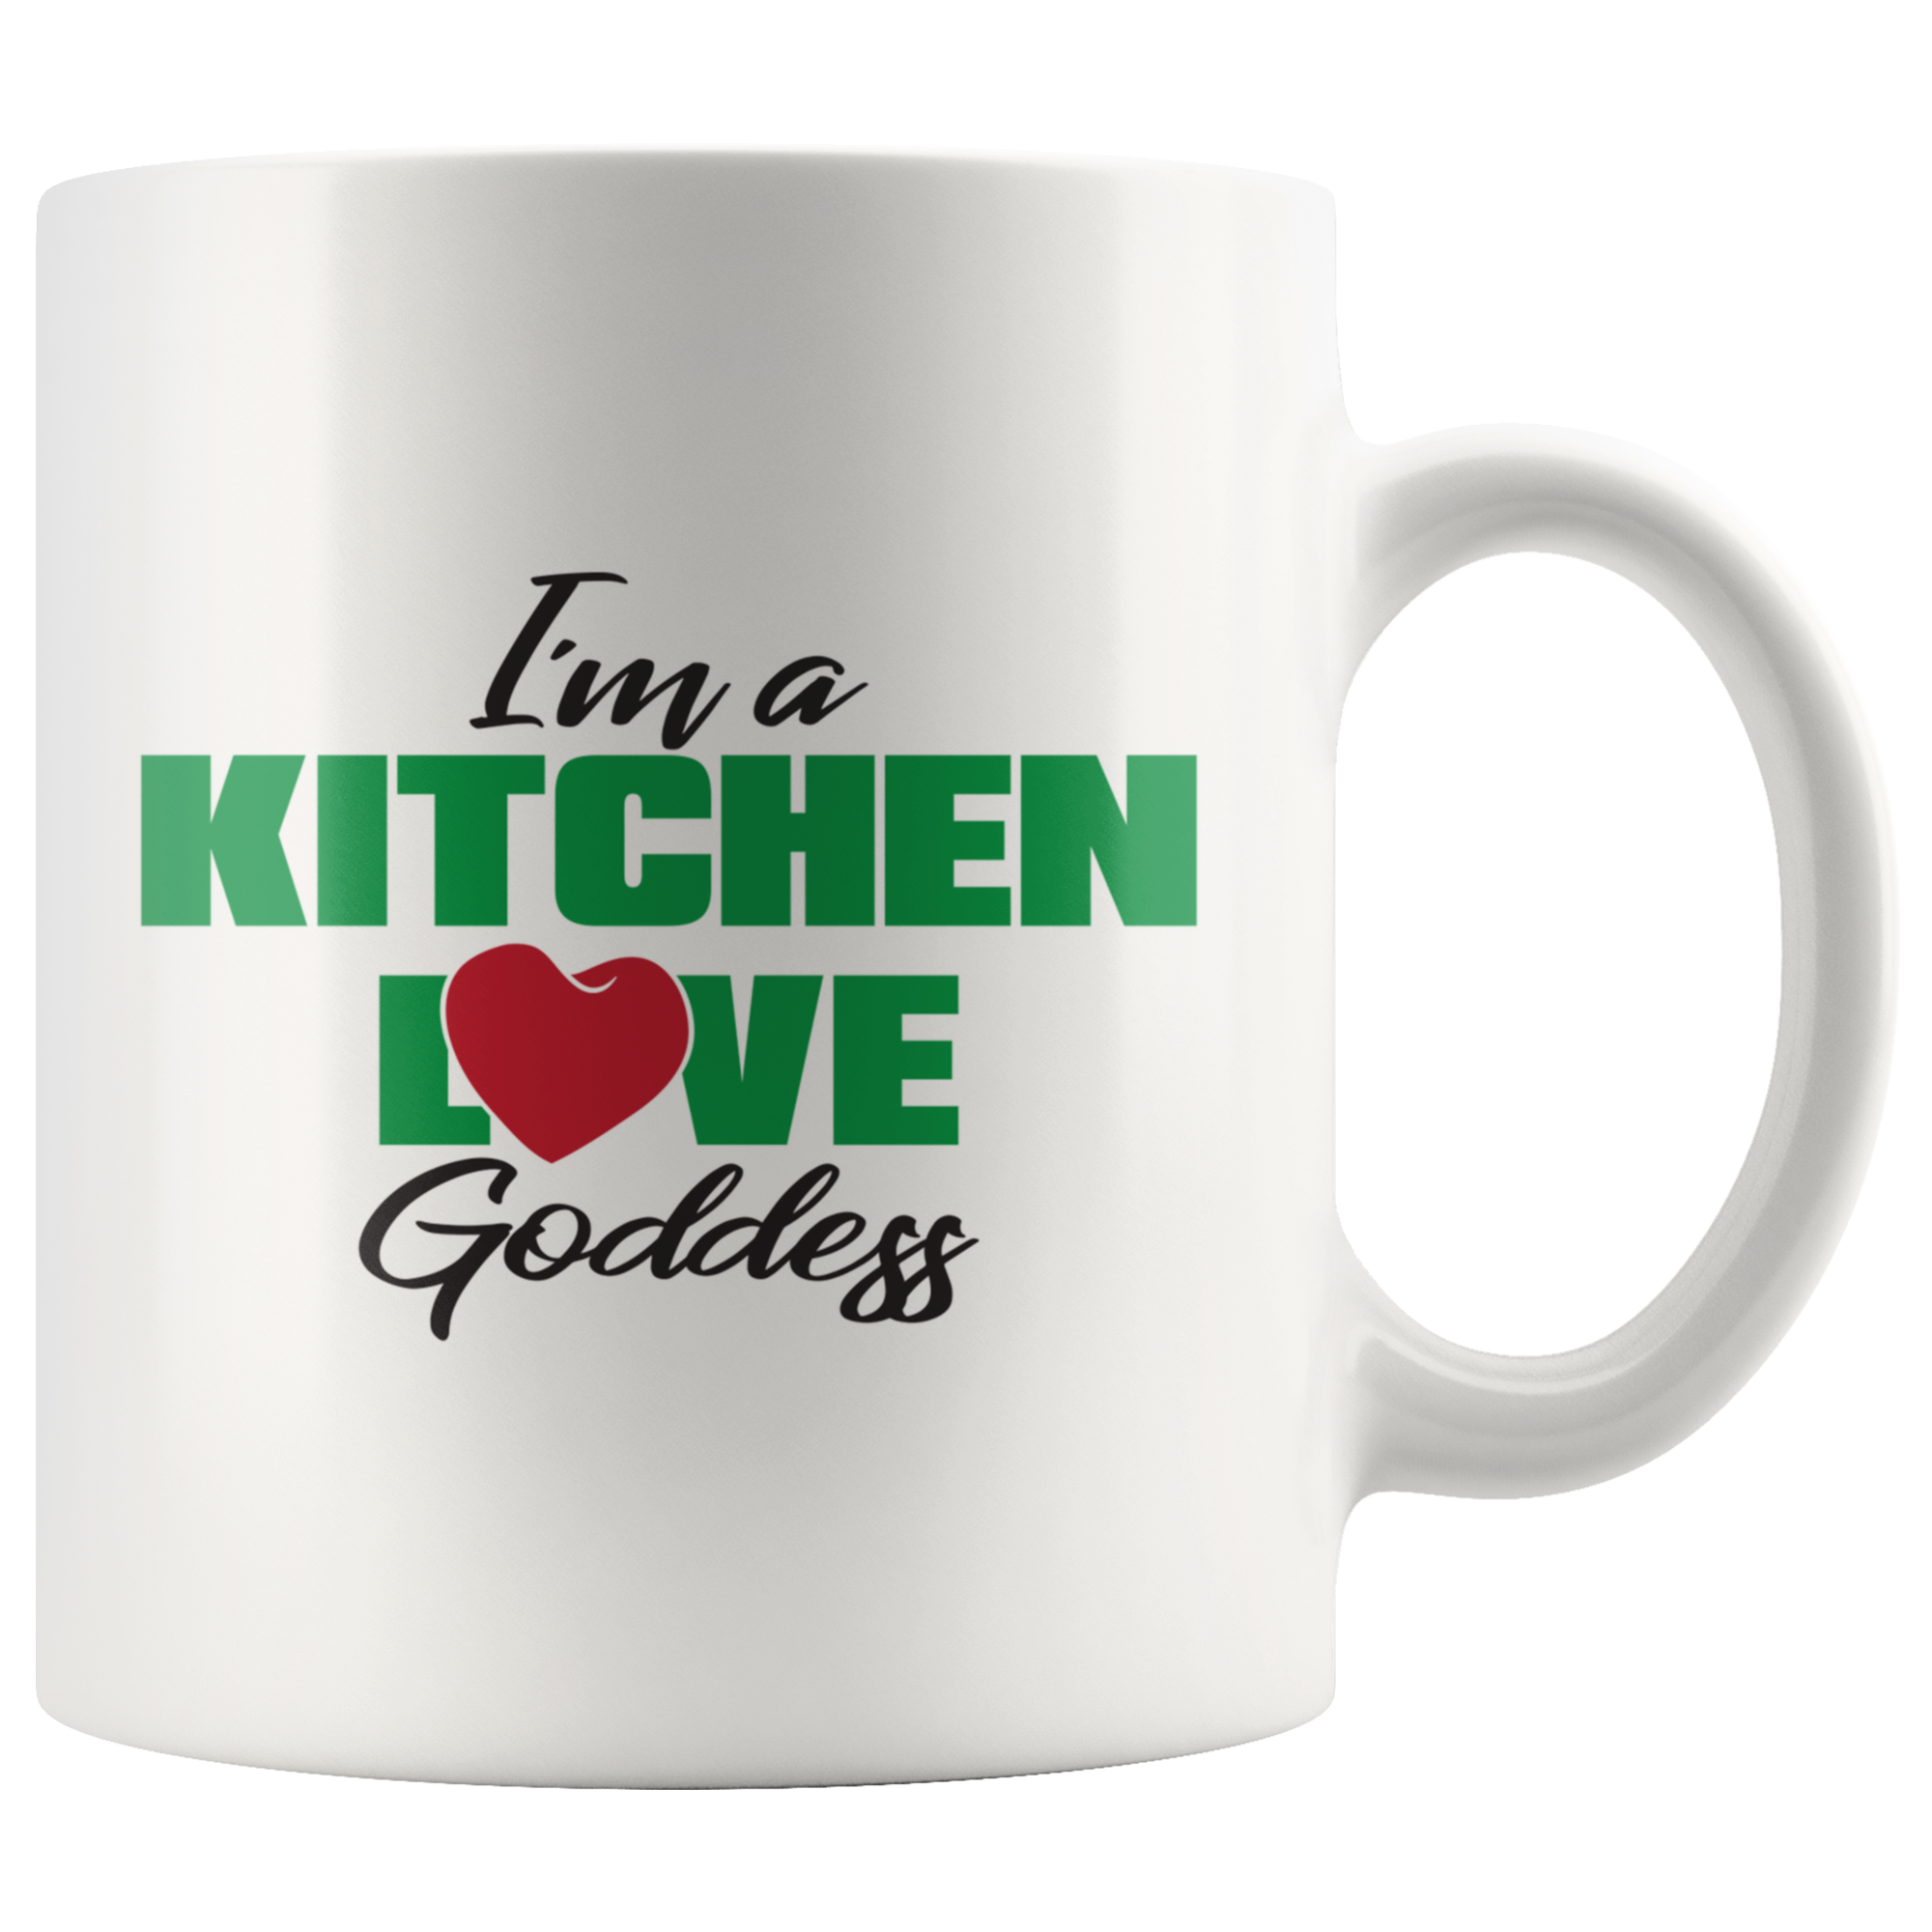 I'm a Kitchen Love Goddess Coffee Mug